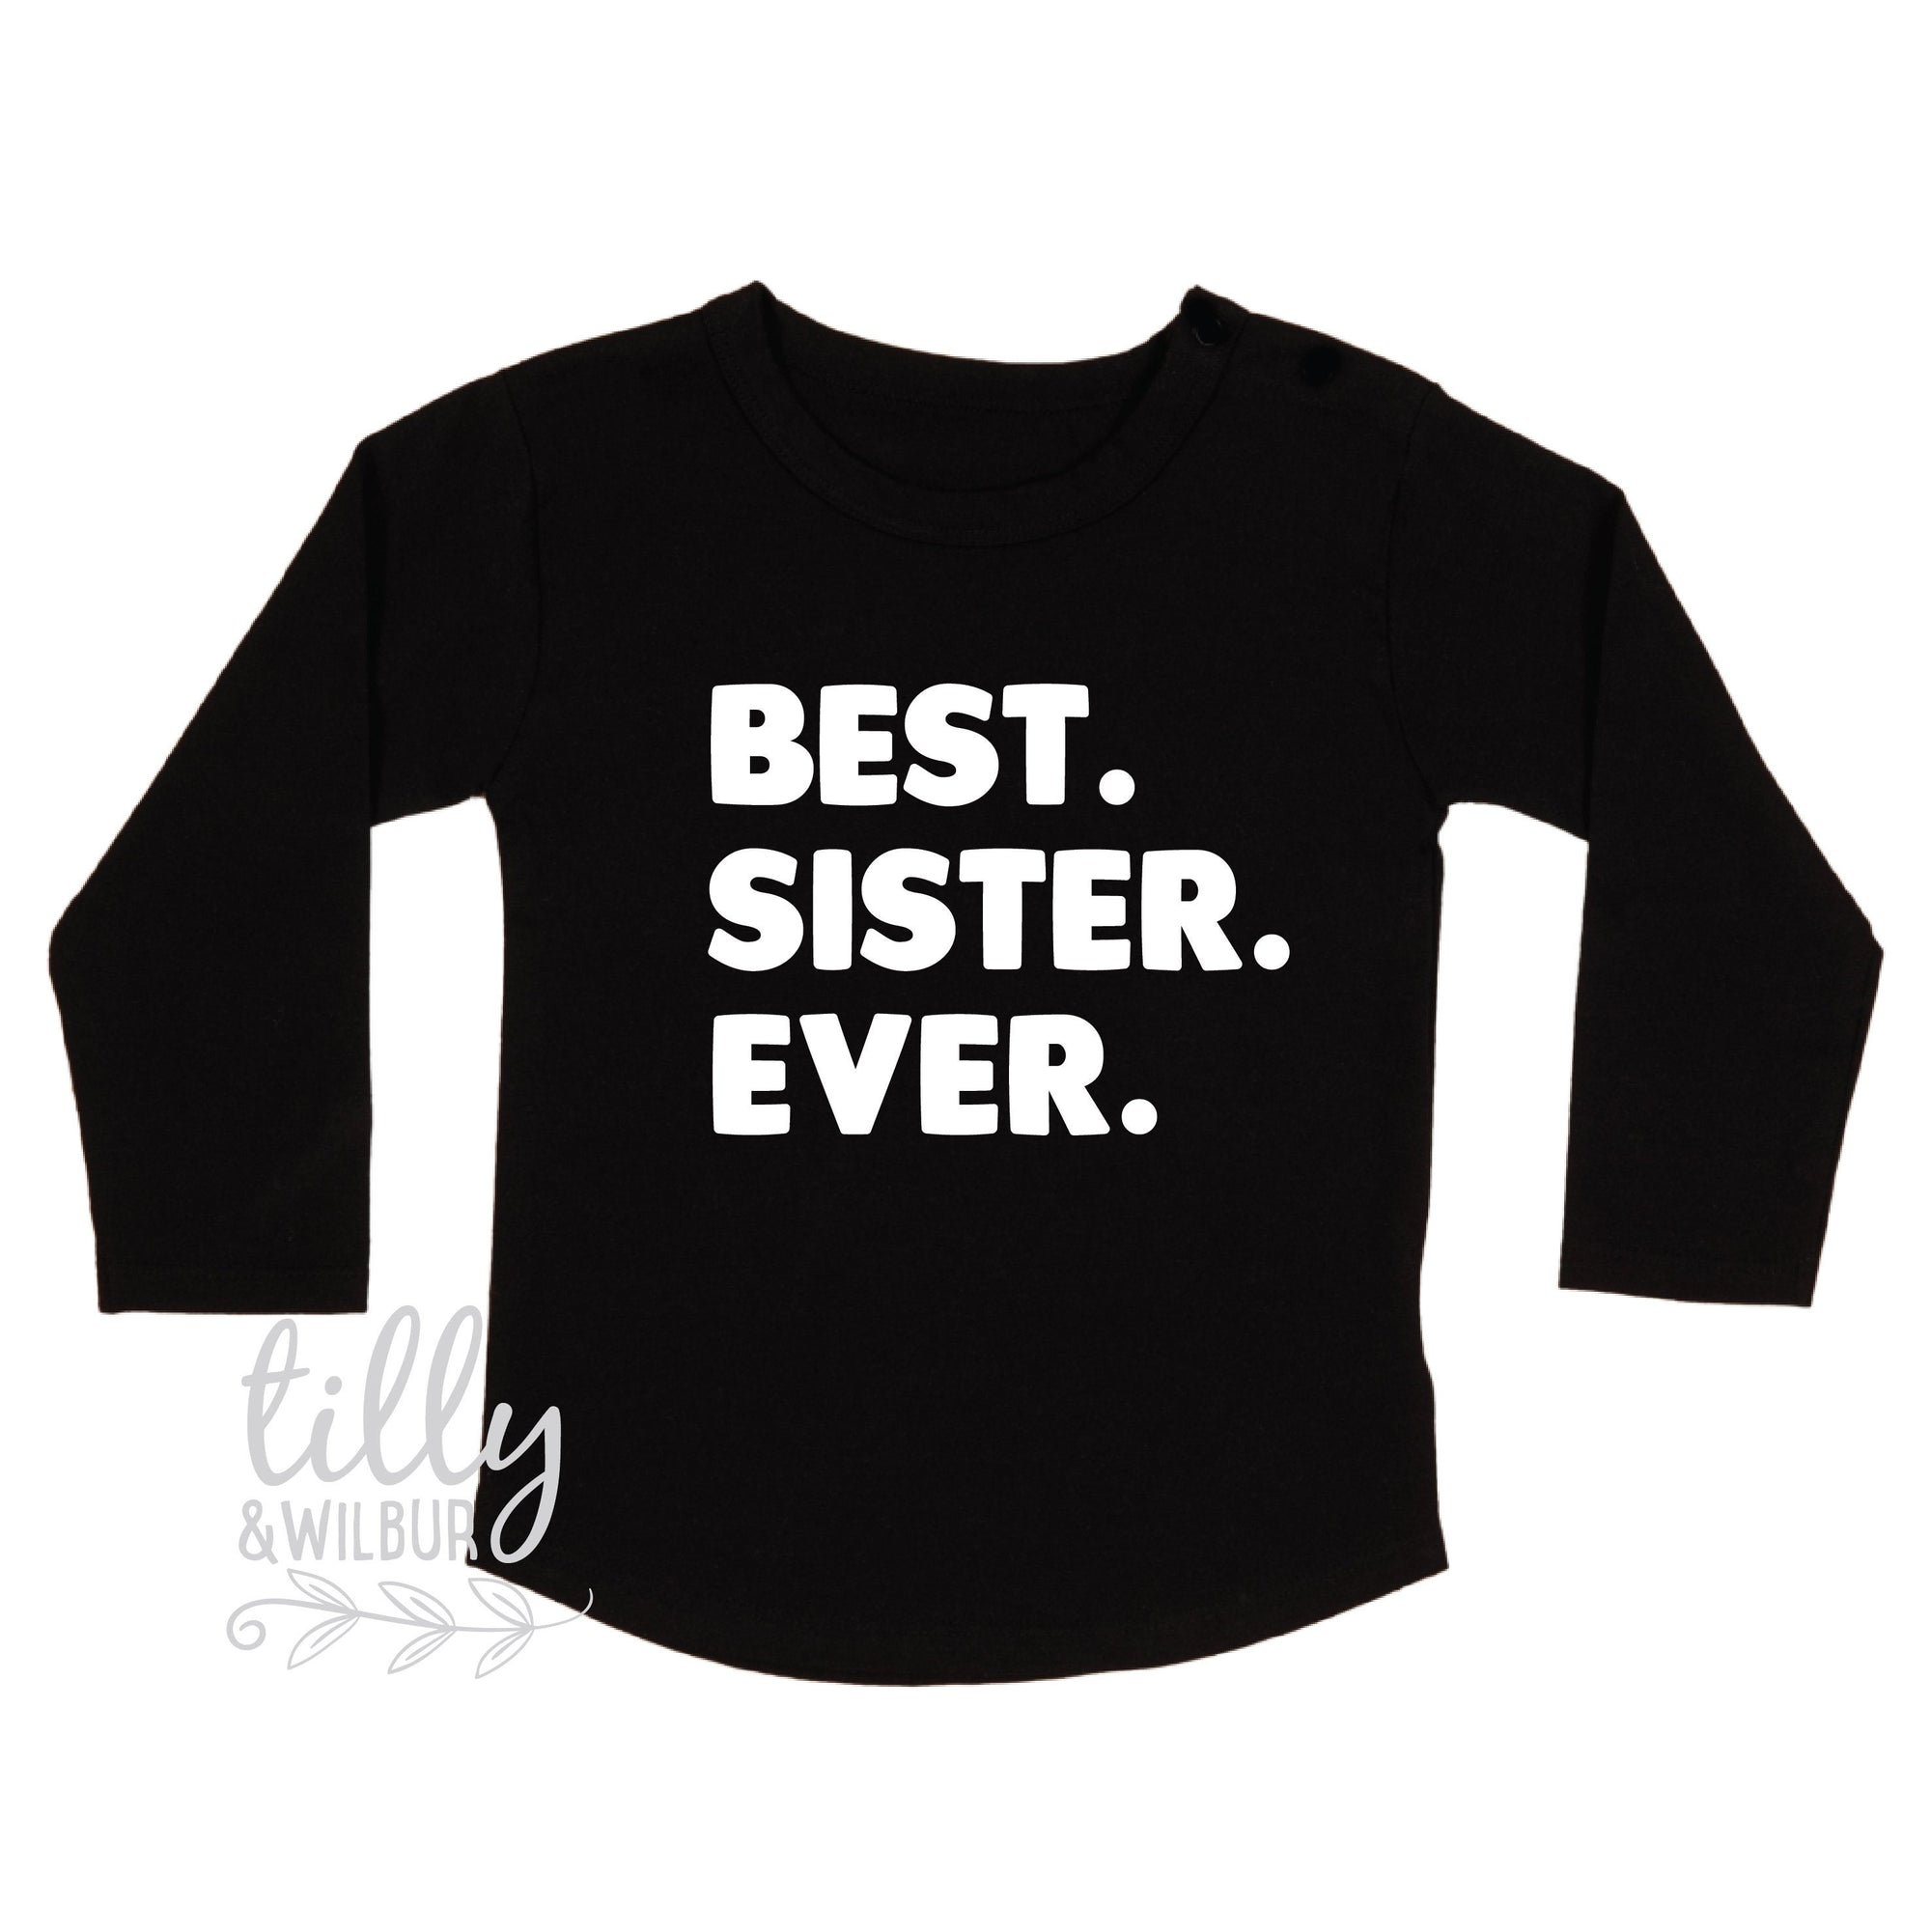 Best. Sister. Ever. Pregnancy Announcement, Sister Gift, Sibling Reveal Shirt, Sister T-Shirt, Pink Short Sleeve Girls Tee, Big Sister Shirt